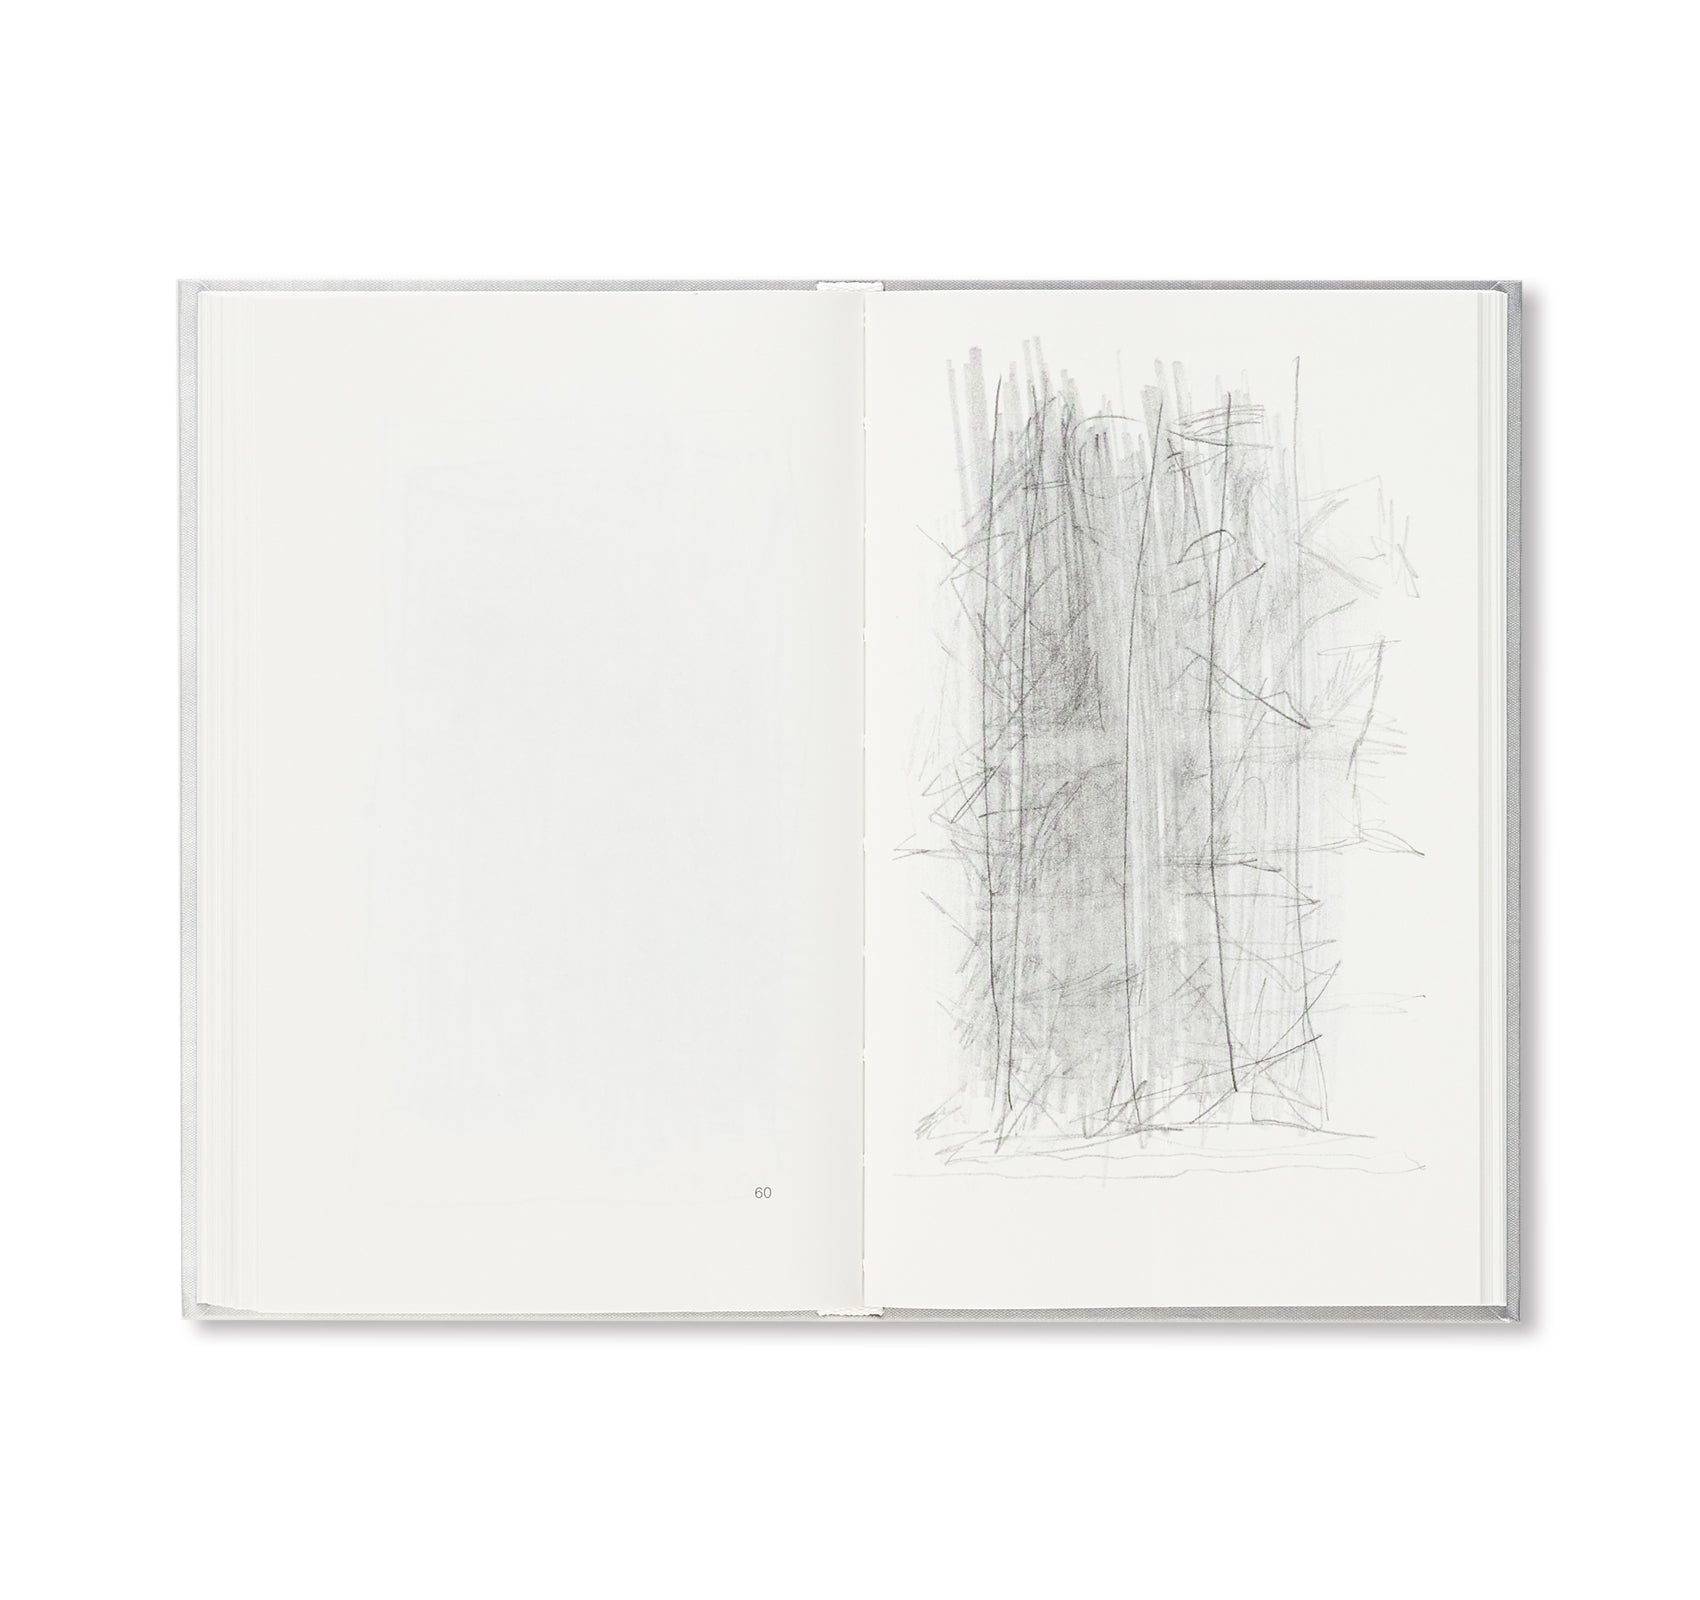 NIGHT SKETCHES by Gerhard Richter